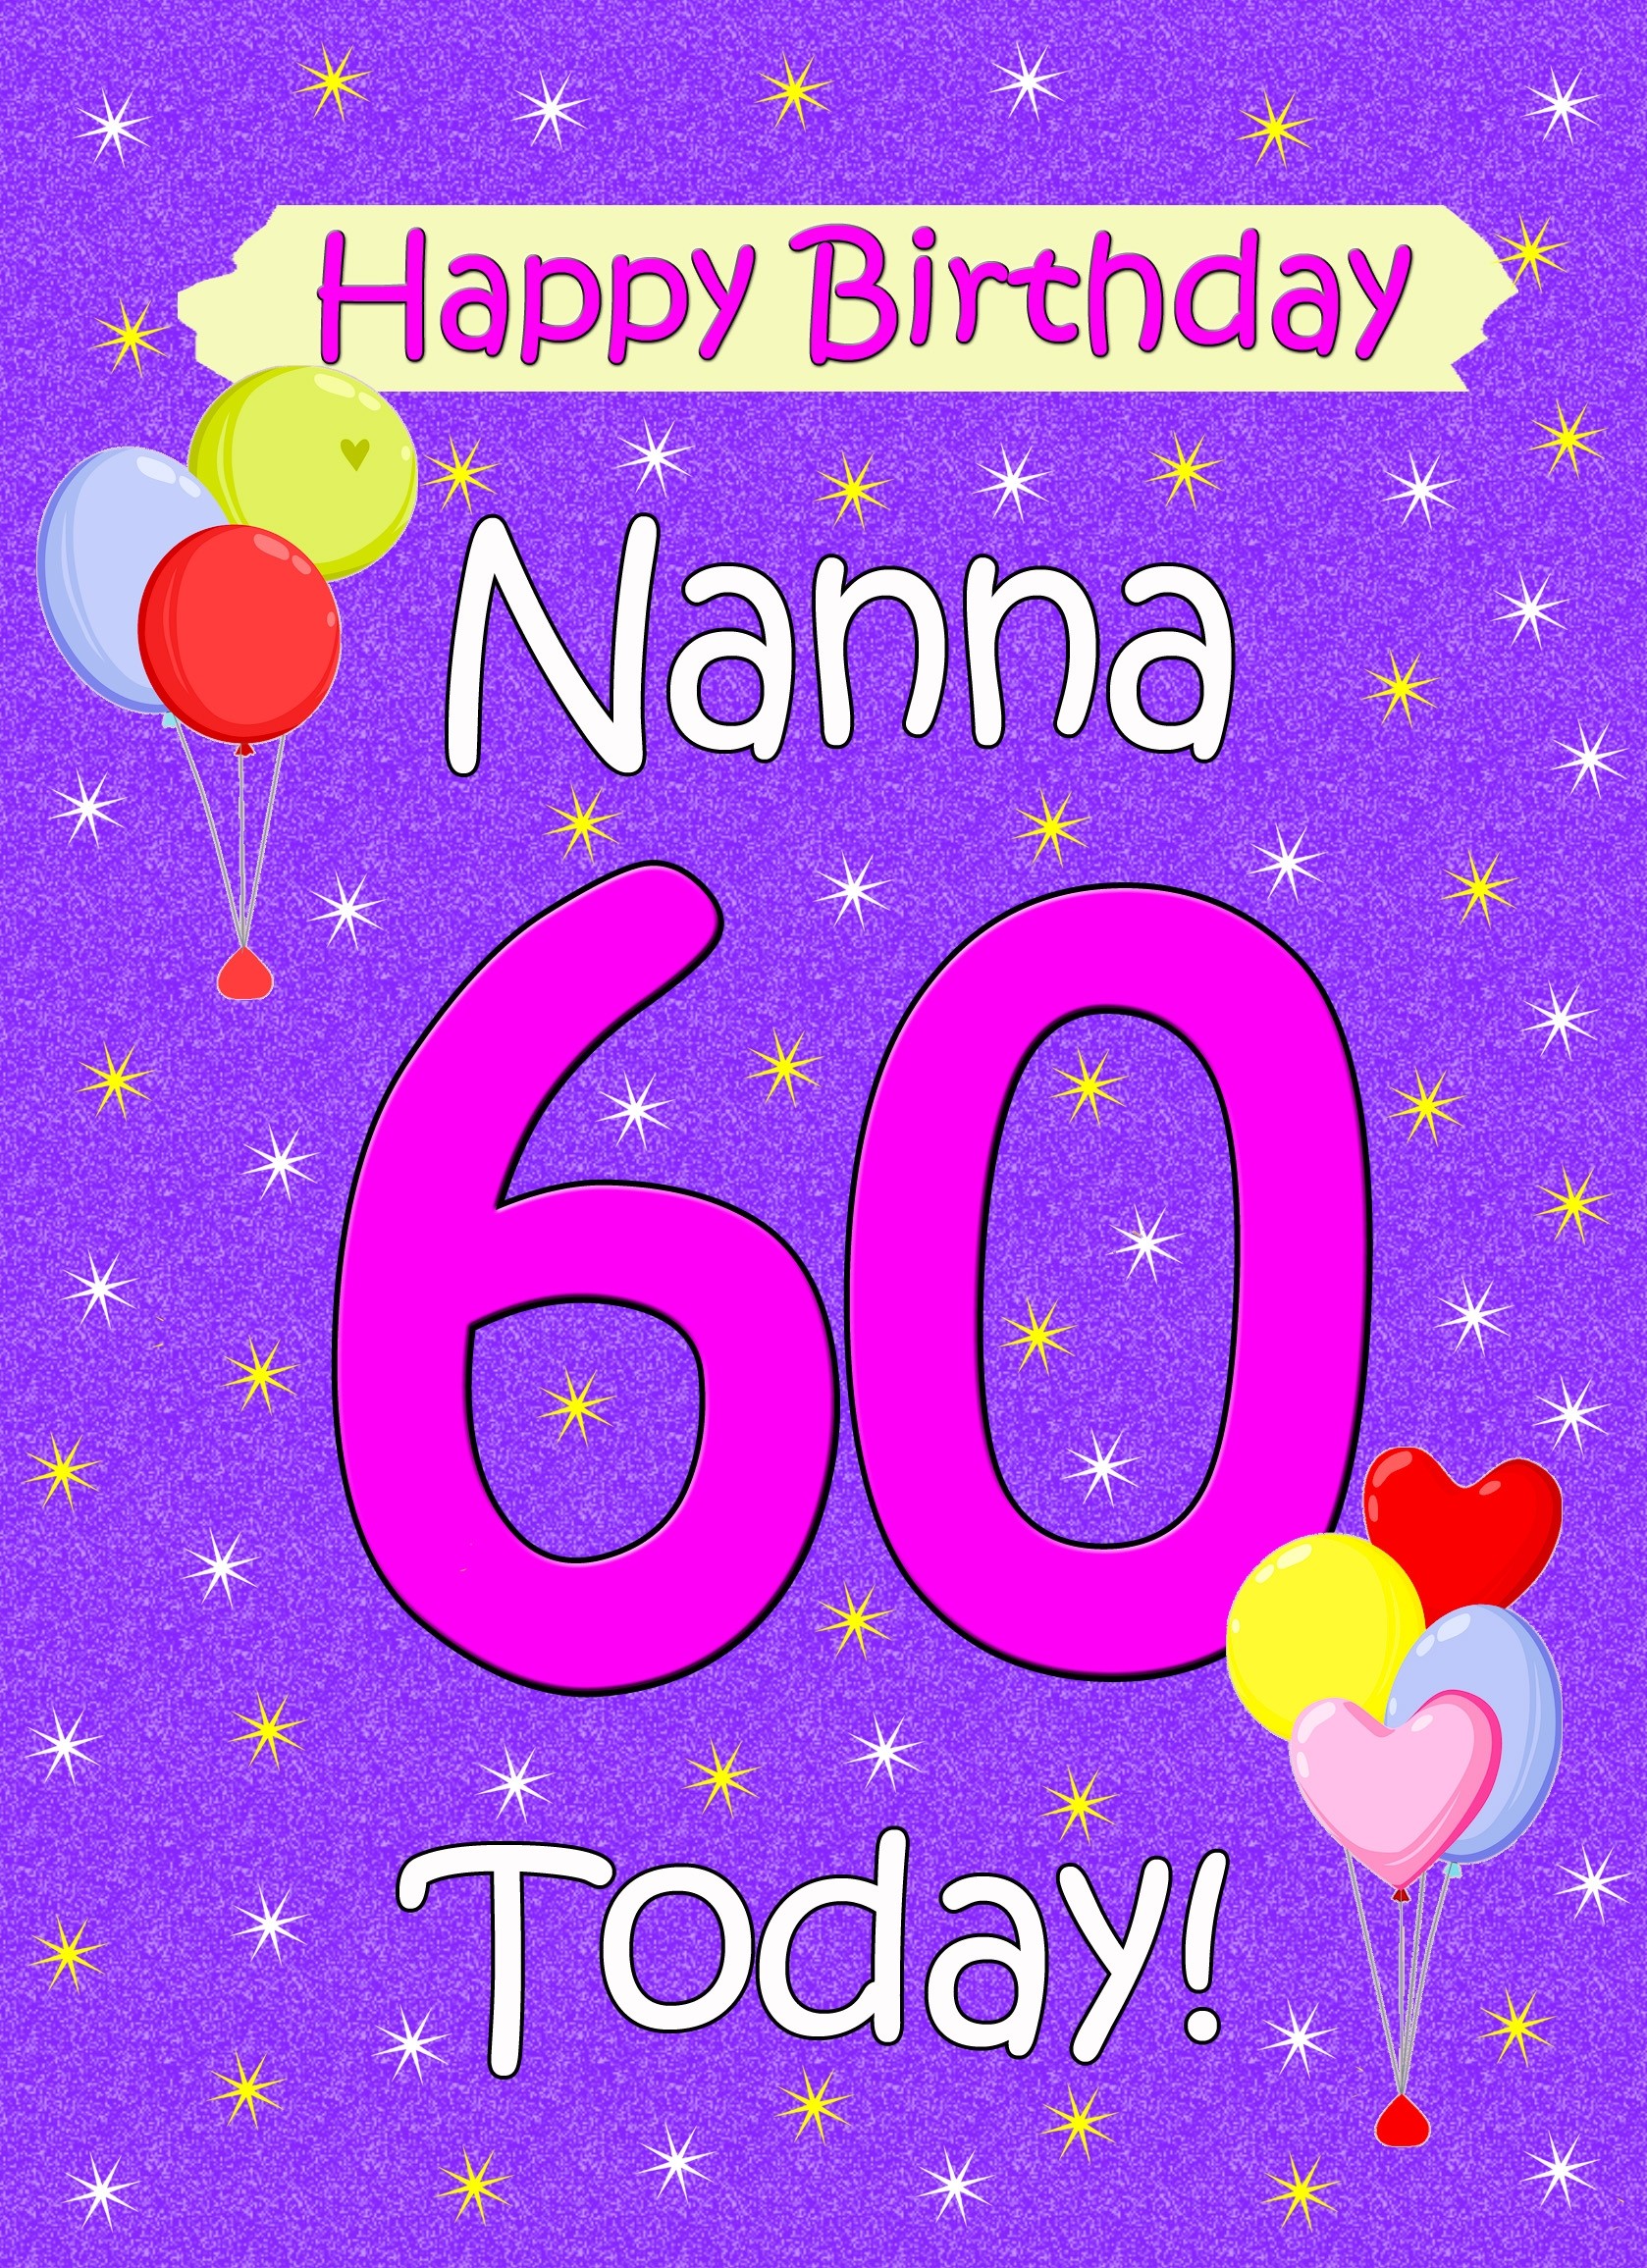 Nanna 60th Birthday Card (Lilac)